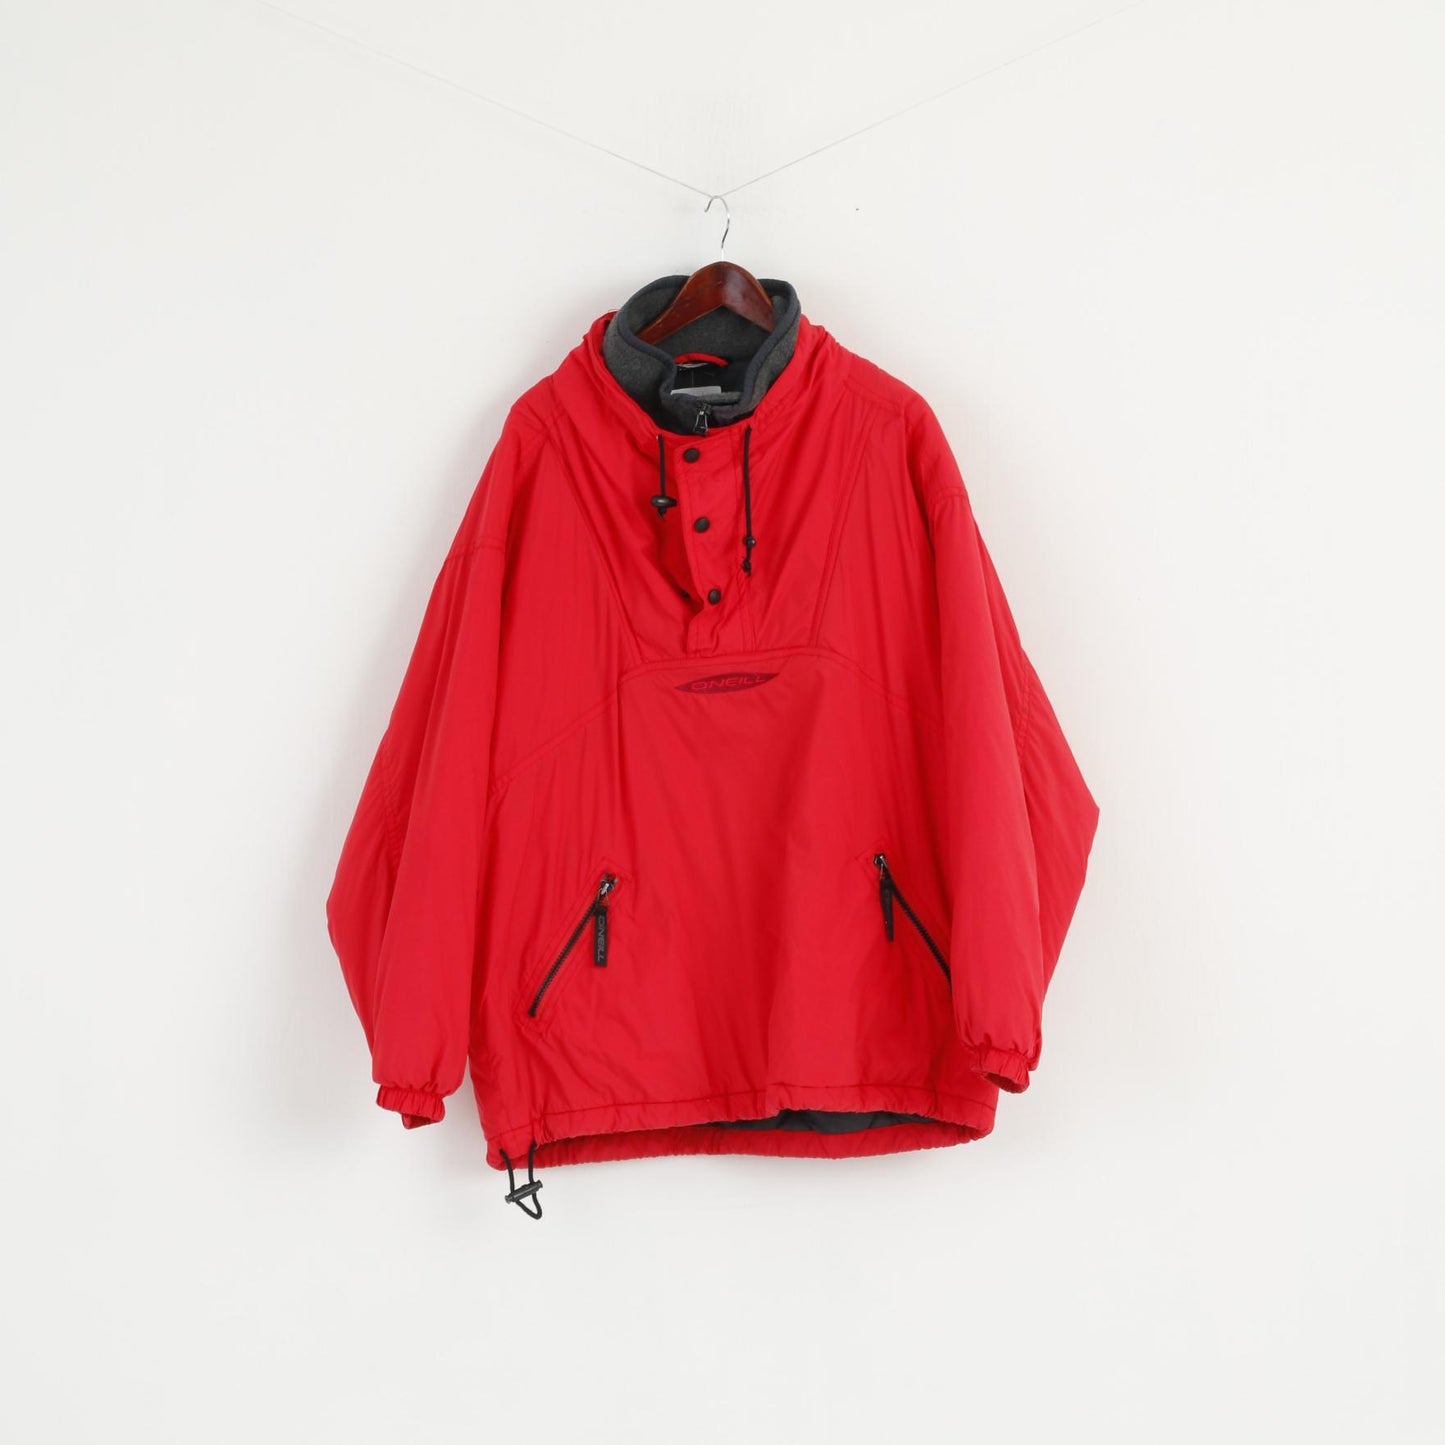 O'Neill Sportswear Men L Jacket Red Ski Snowboarding Pullover Zip Neck Padded Vintage Top